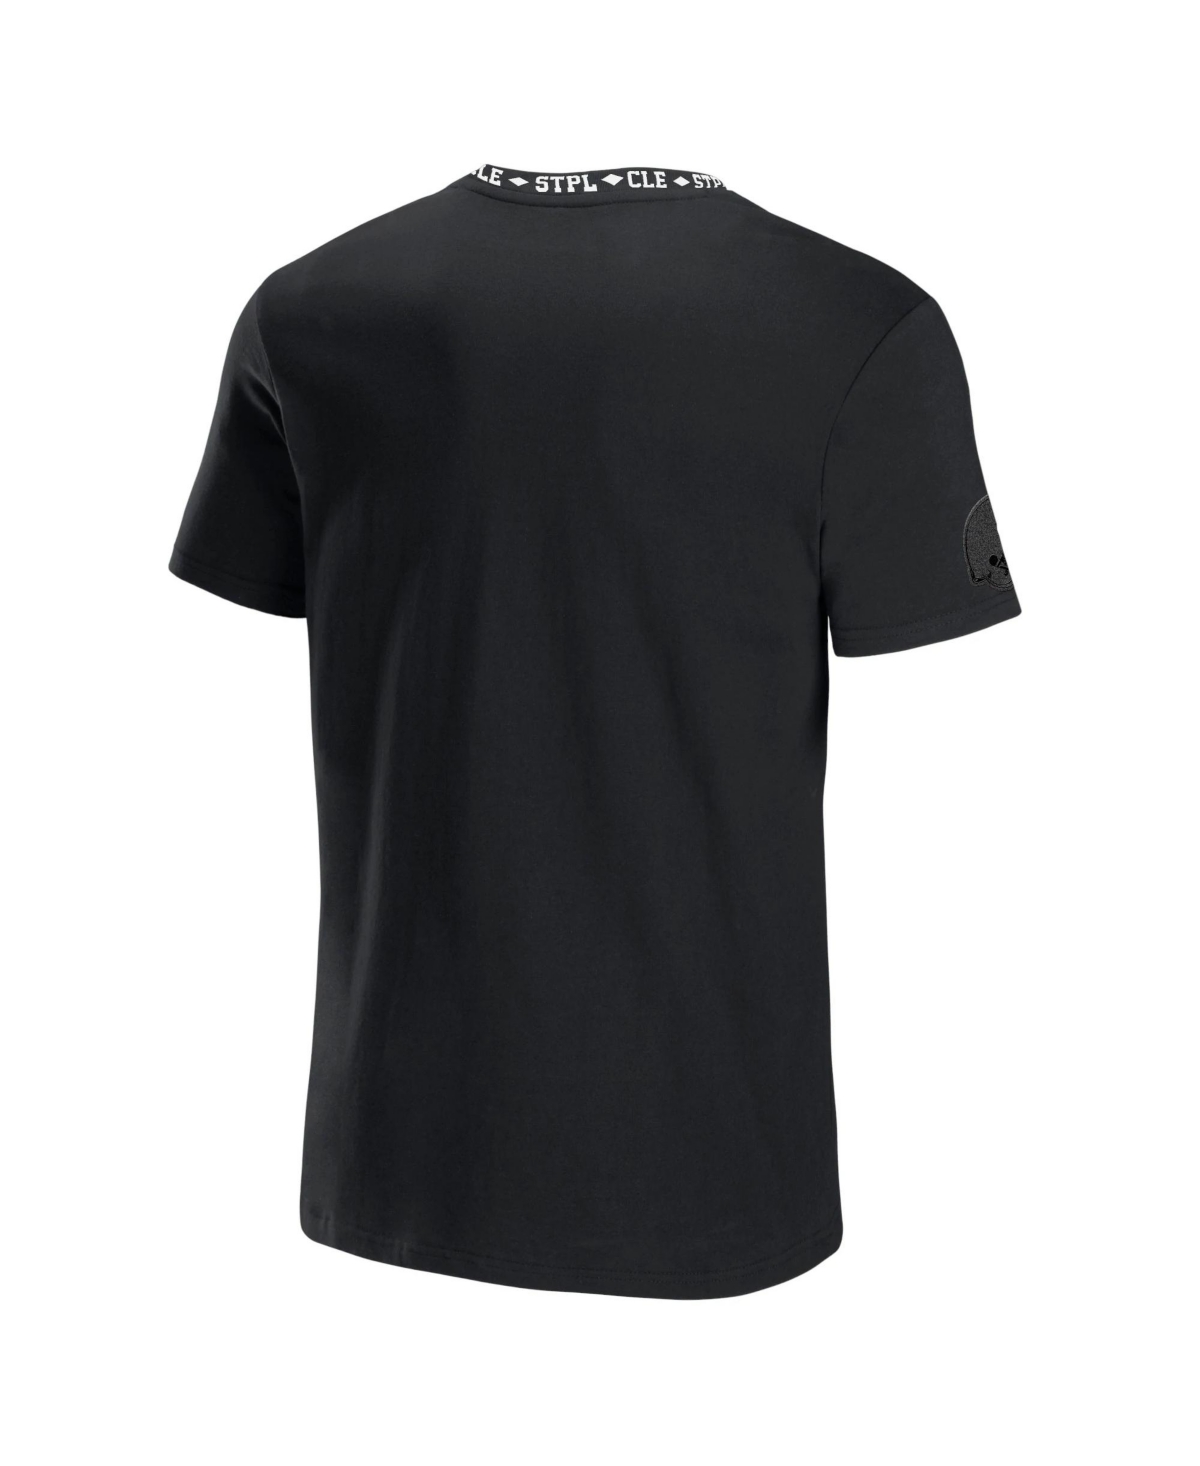 Shop Nfl Properties Men's Nfl X Staple Black Cleveland Browns Embroidered Fundementals Globe Short Sleeve T-shirt